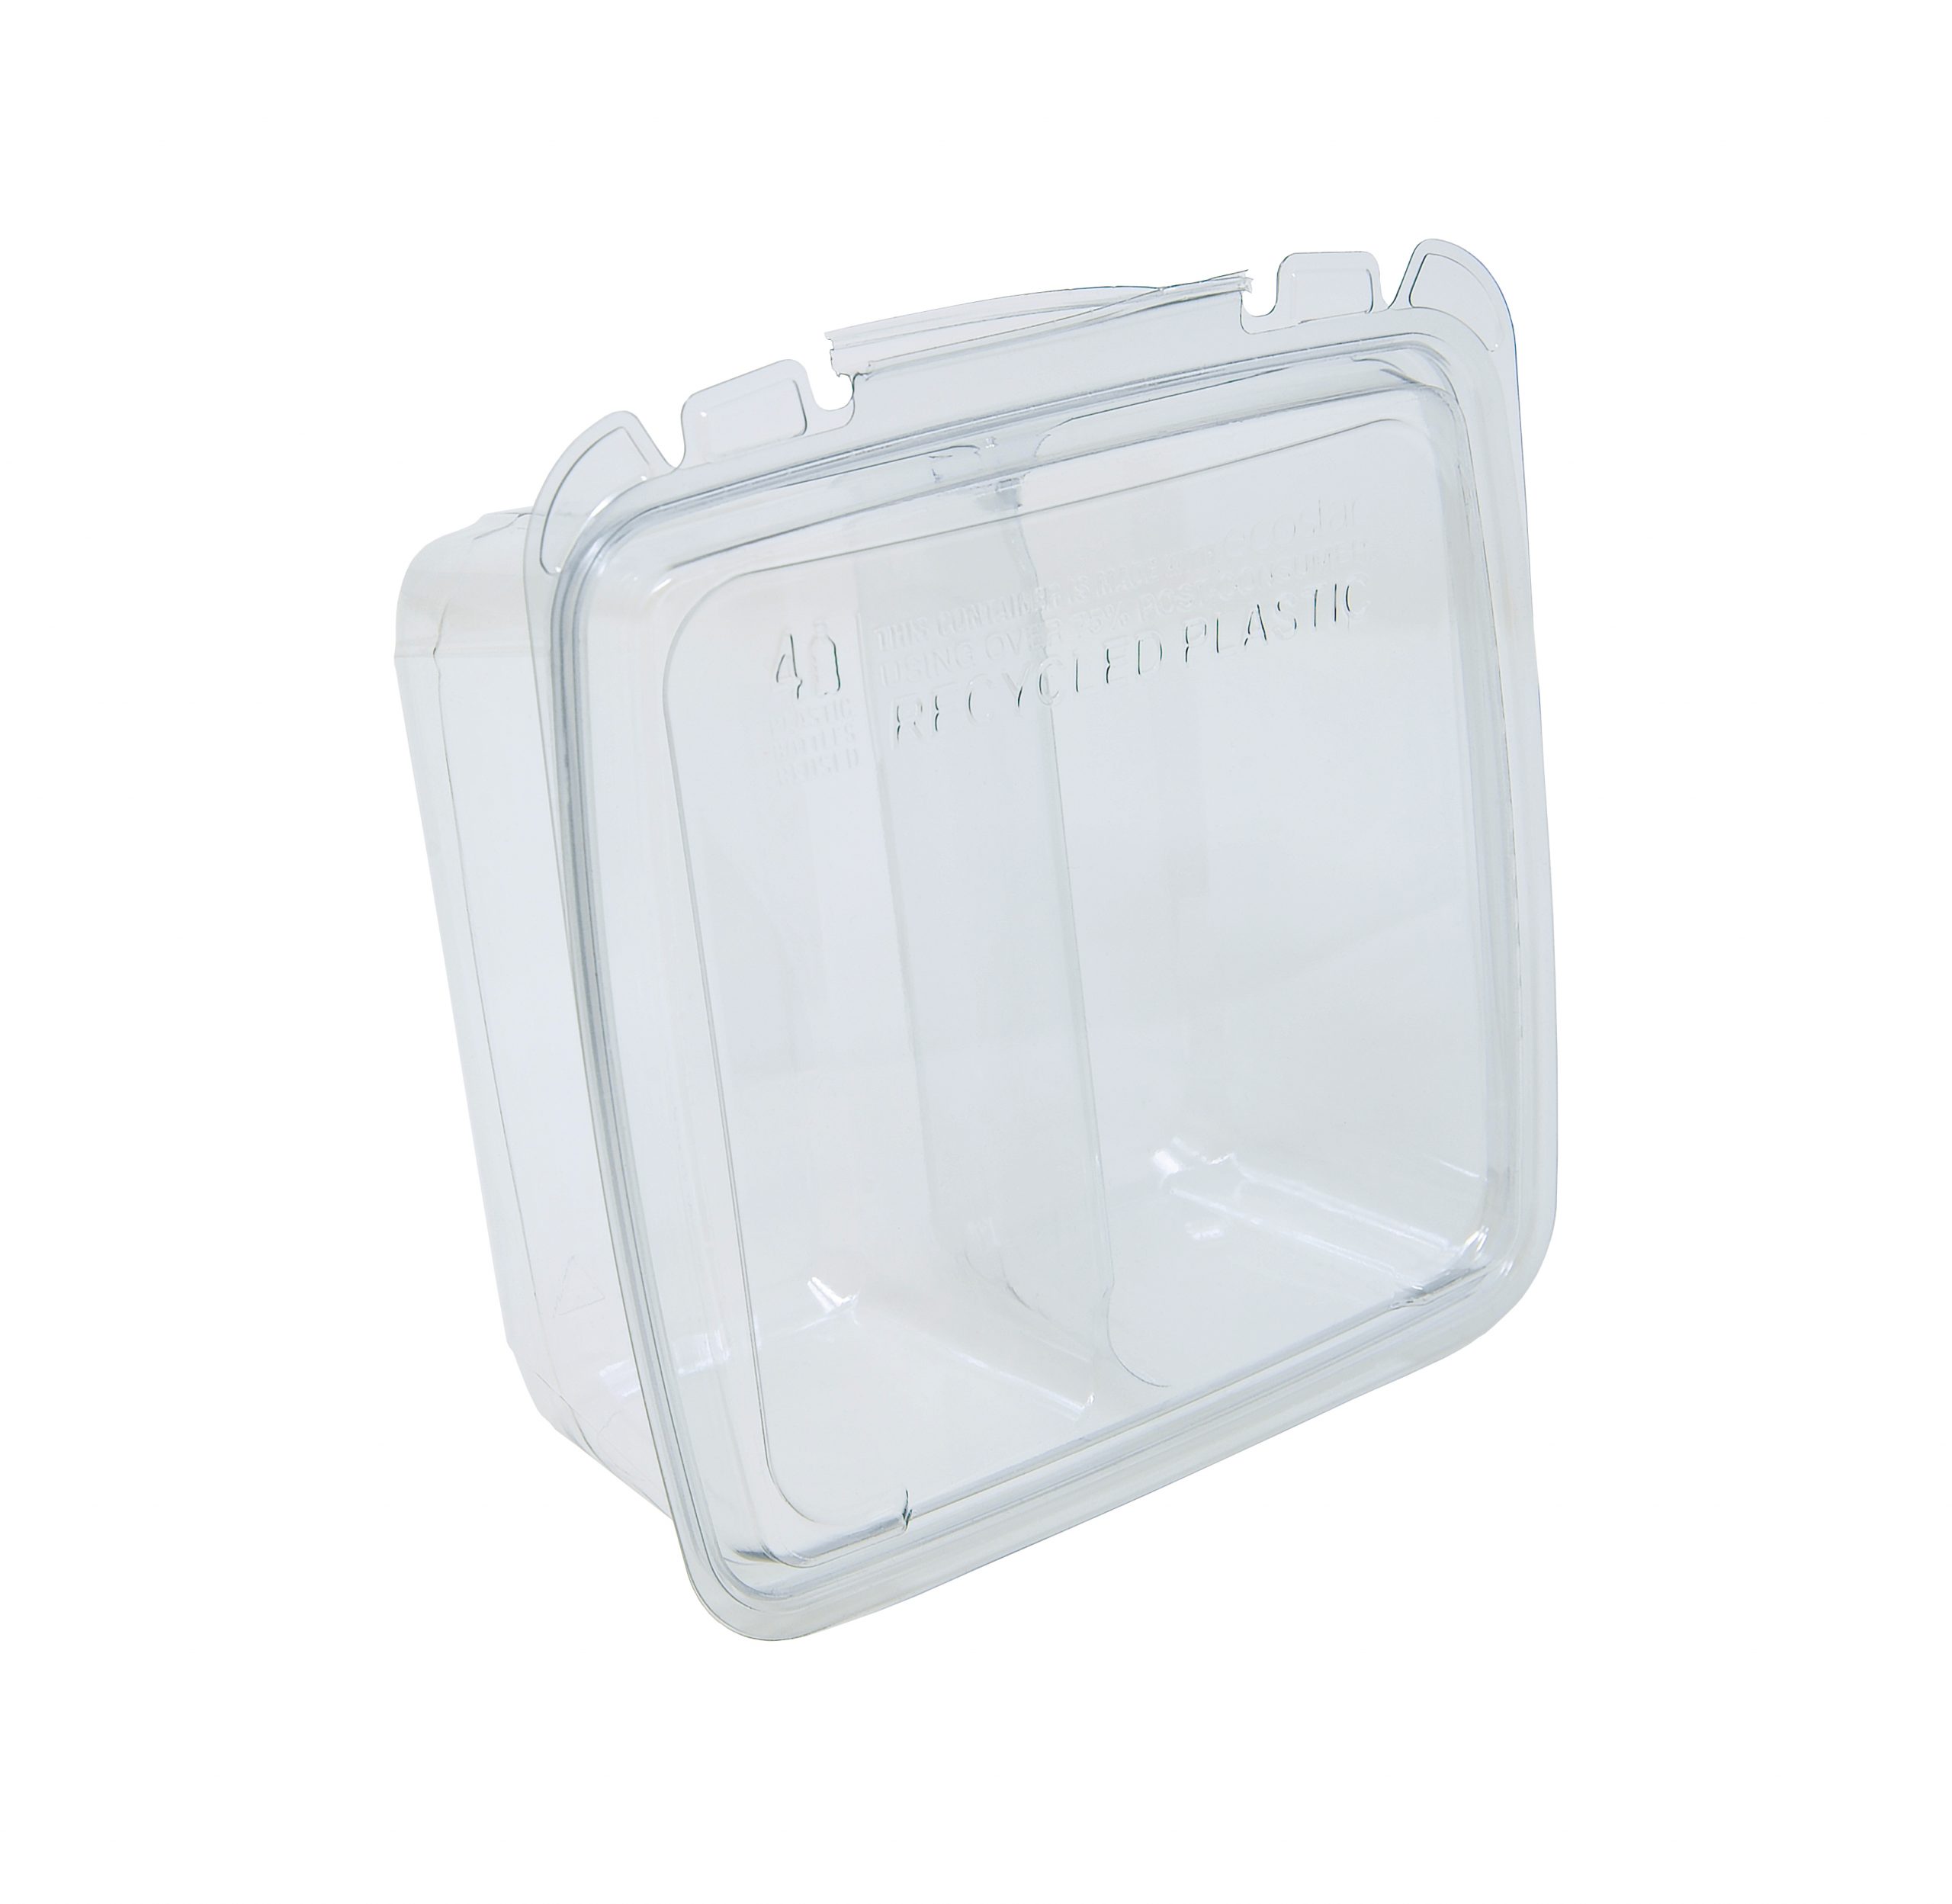 Crestware 7-1/4 x 7-1/4 x 4 Plastic Square Storage Container, Clear Clear Plastic SQC2